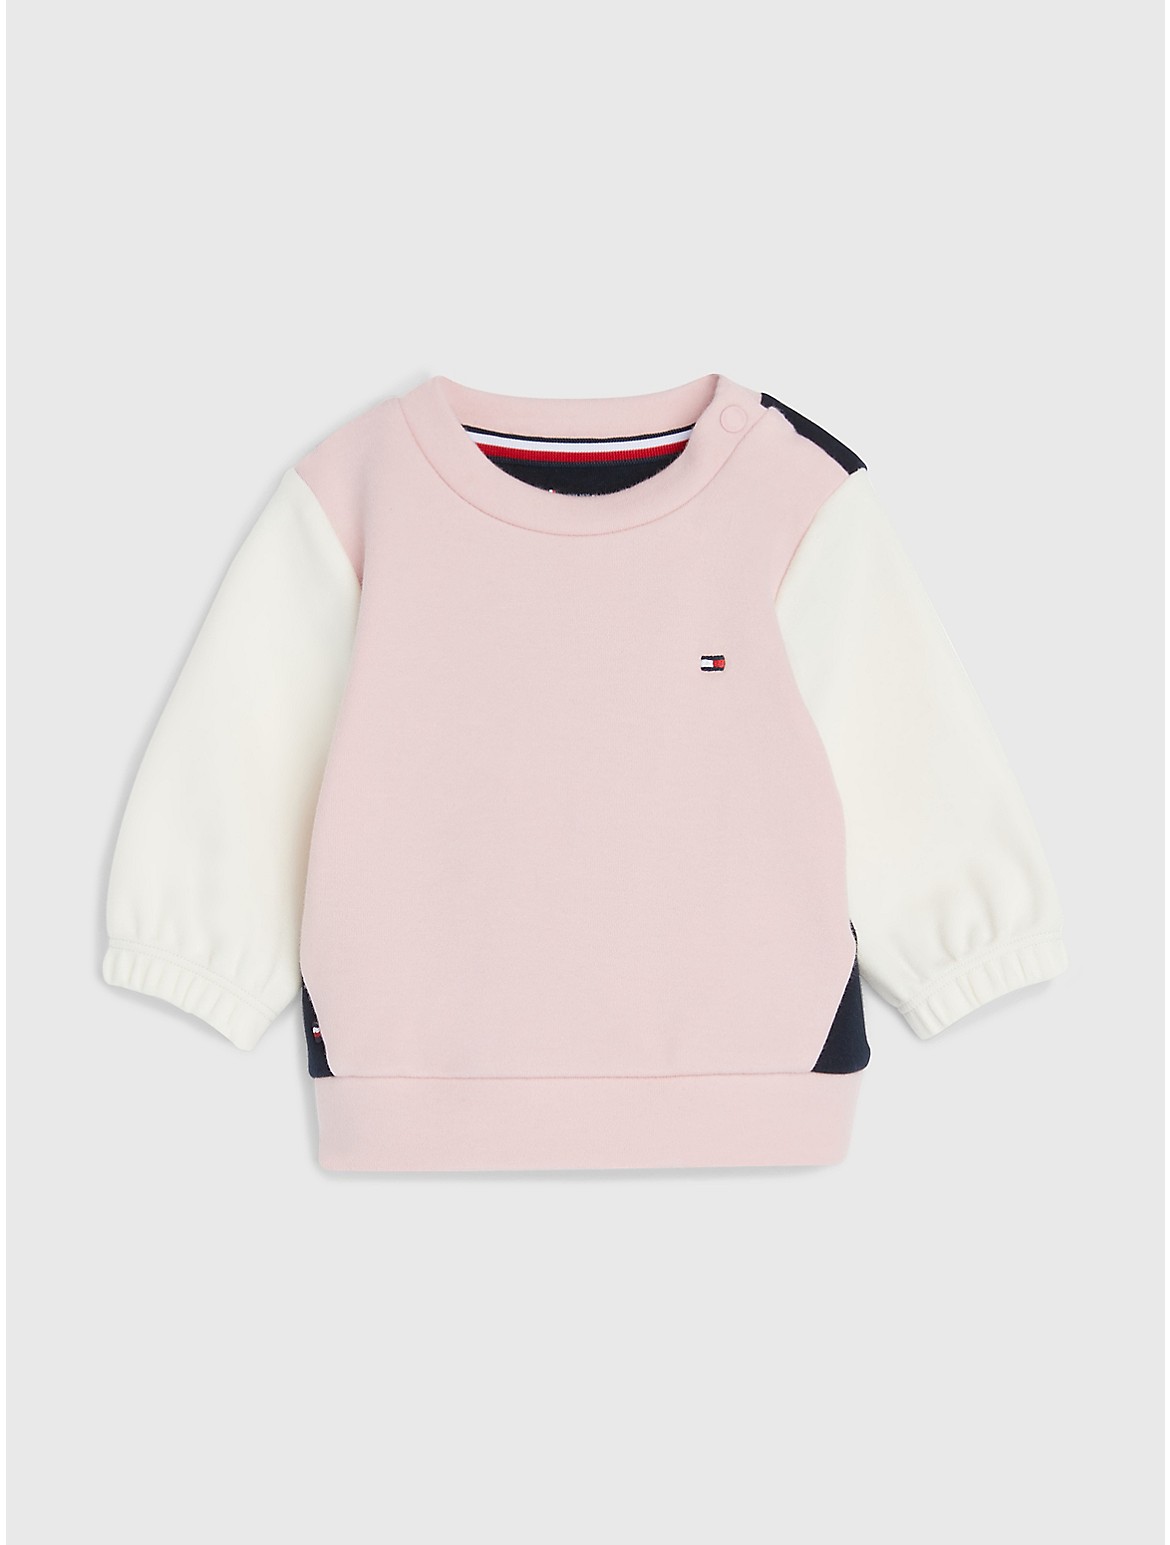 Tommy Hilfiger Babies' Colorblock Shirt & Pant Set - Pink - 3-6M